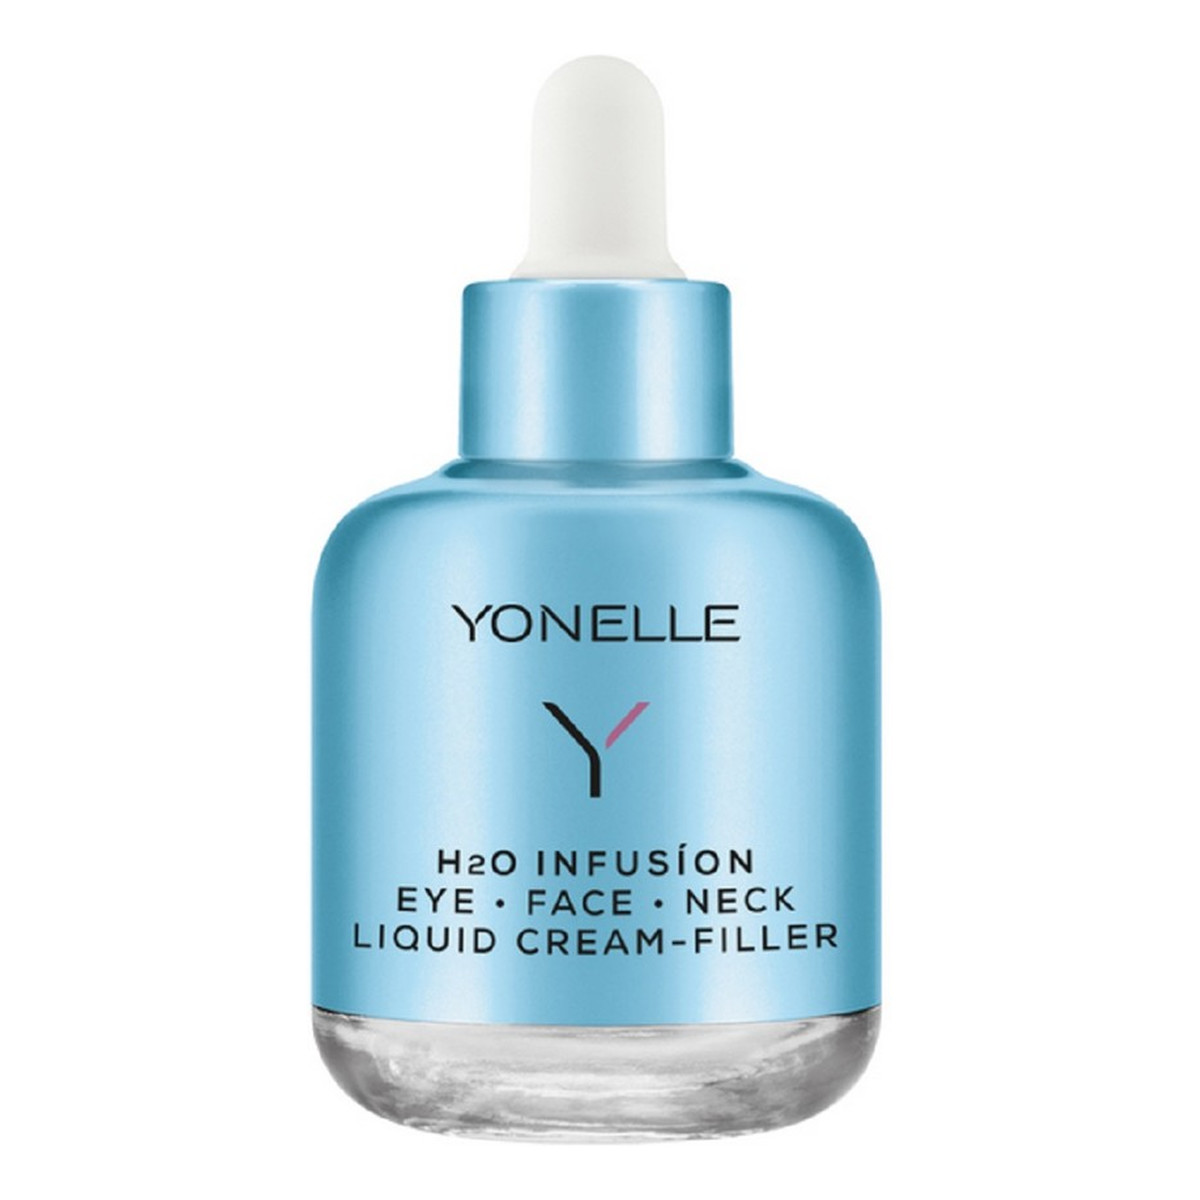 Yonelle H2O Infusion Eye Face Neck Liquid Cream Filler Przeciwzmarszczkowy krem do twarzy 50ml